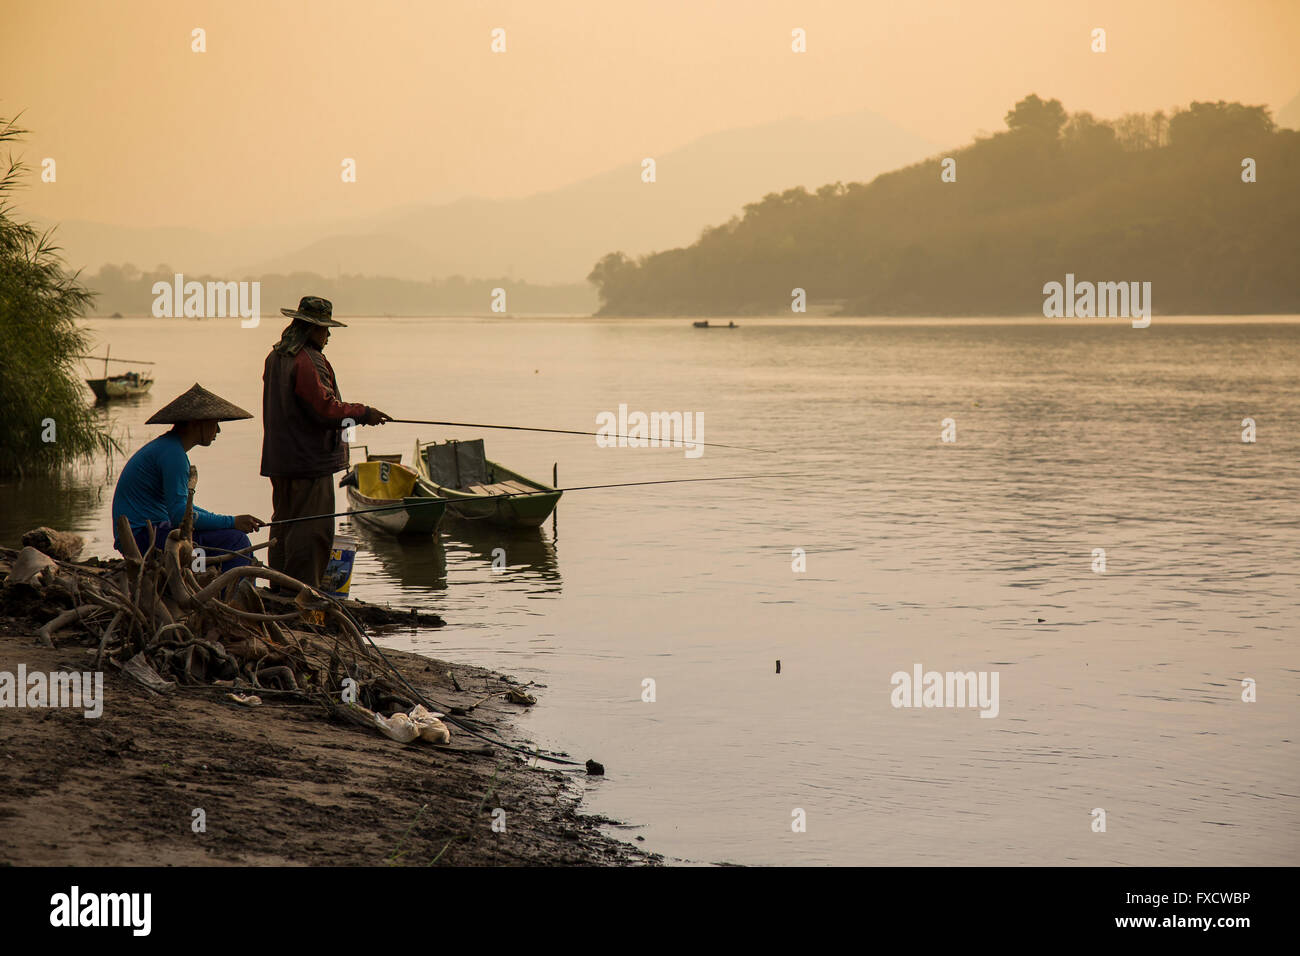 Luang Prabang, Laos - mars 2016. Deux hommes la pêche sur les rives du Mékong. Banque D'Images